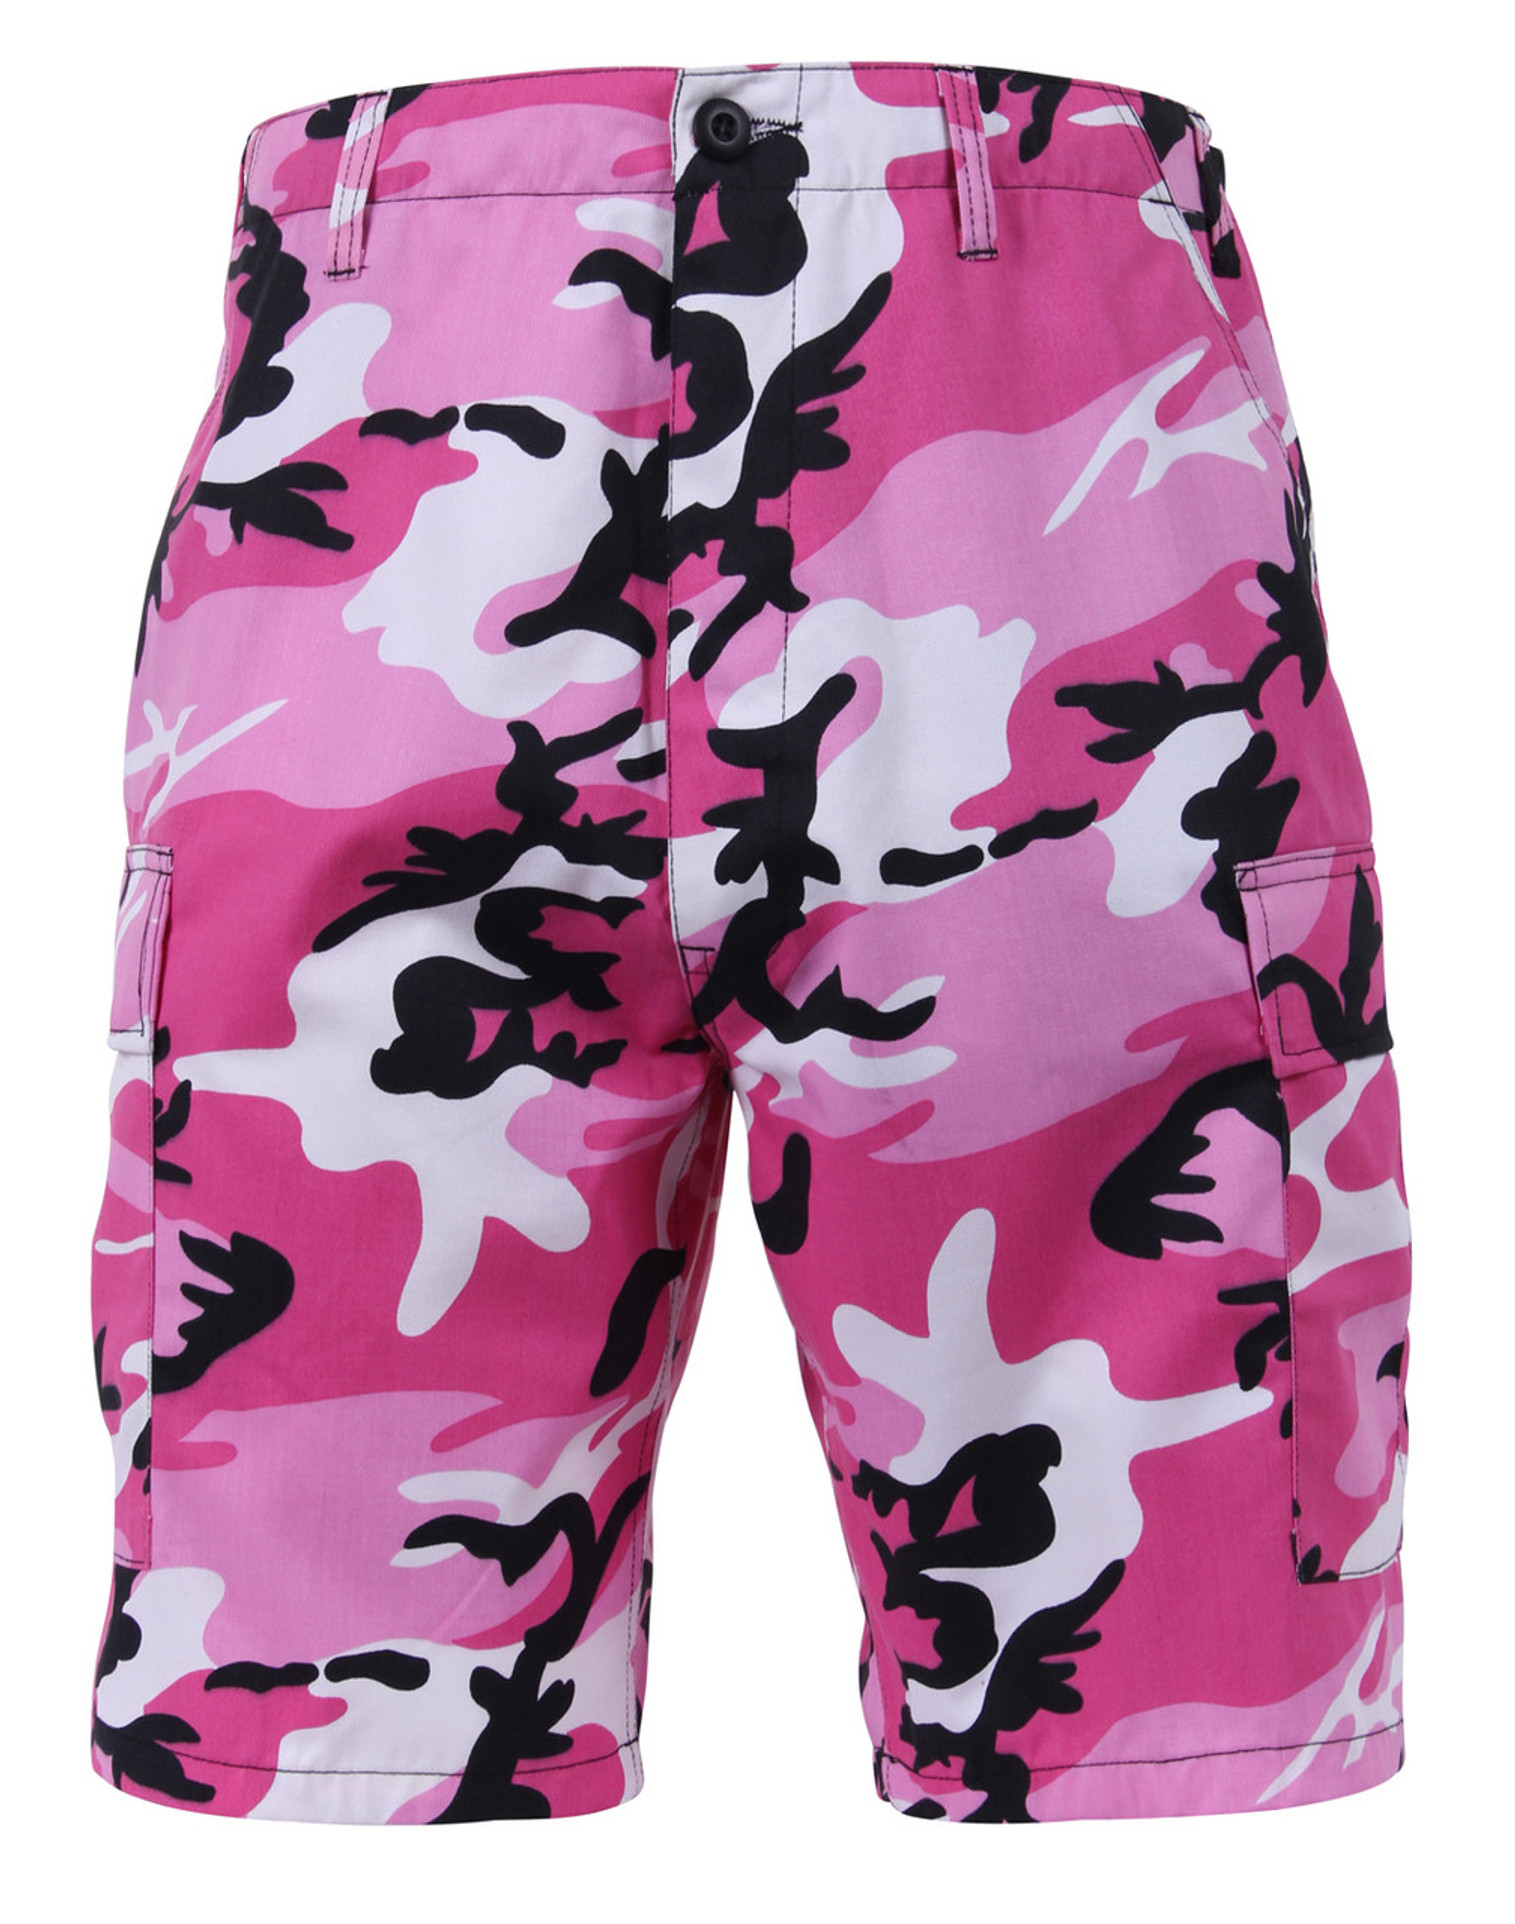 Rothco Colored Camo BDU Shorts - Pink Camo